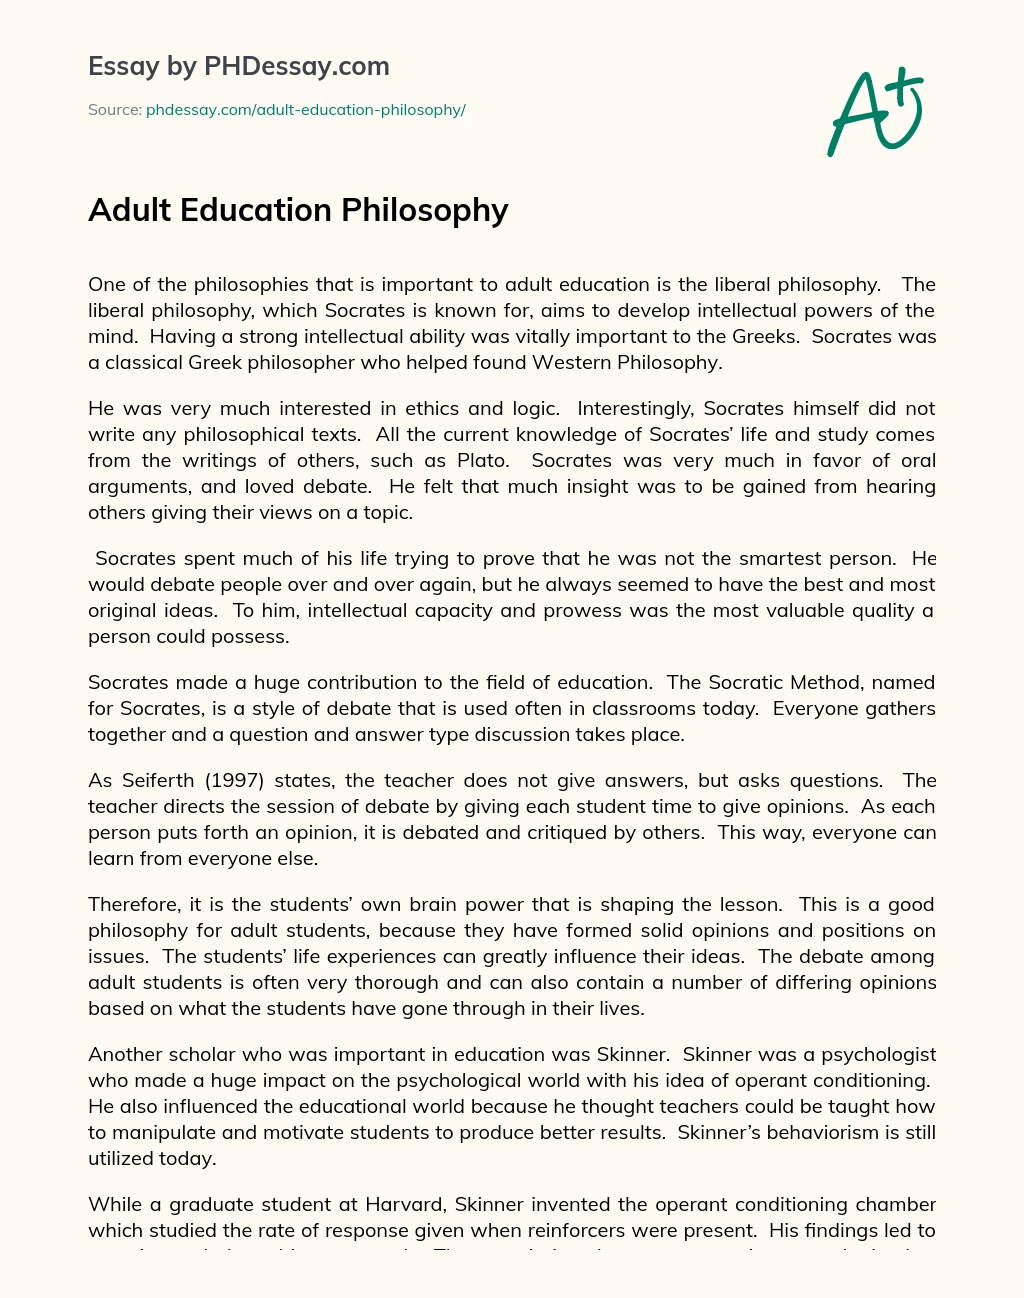 Adult Education Philosophy essay